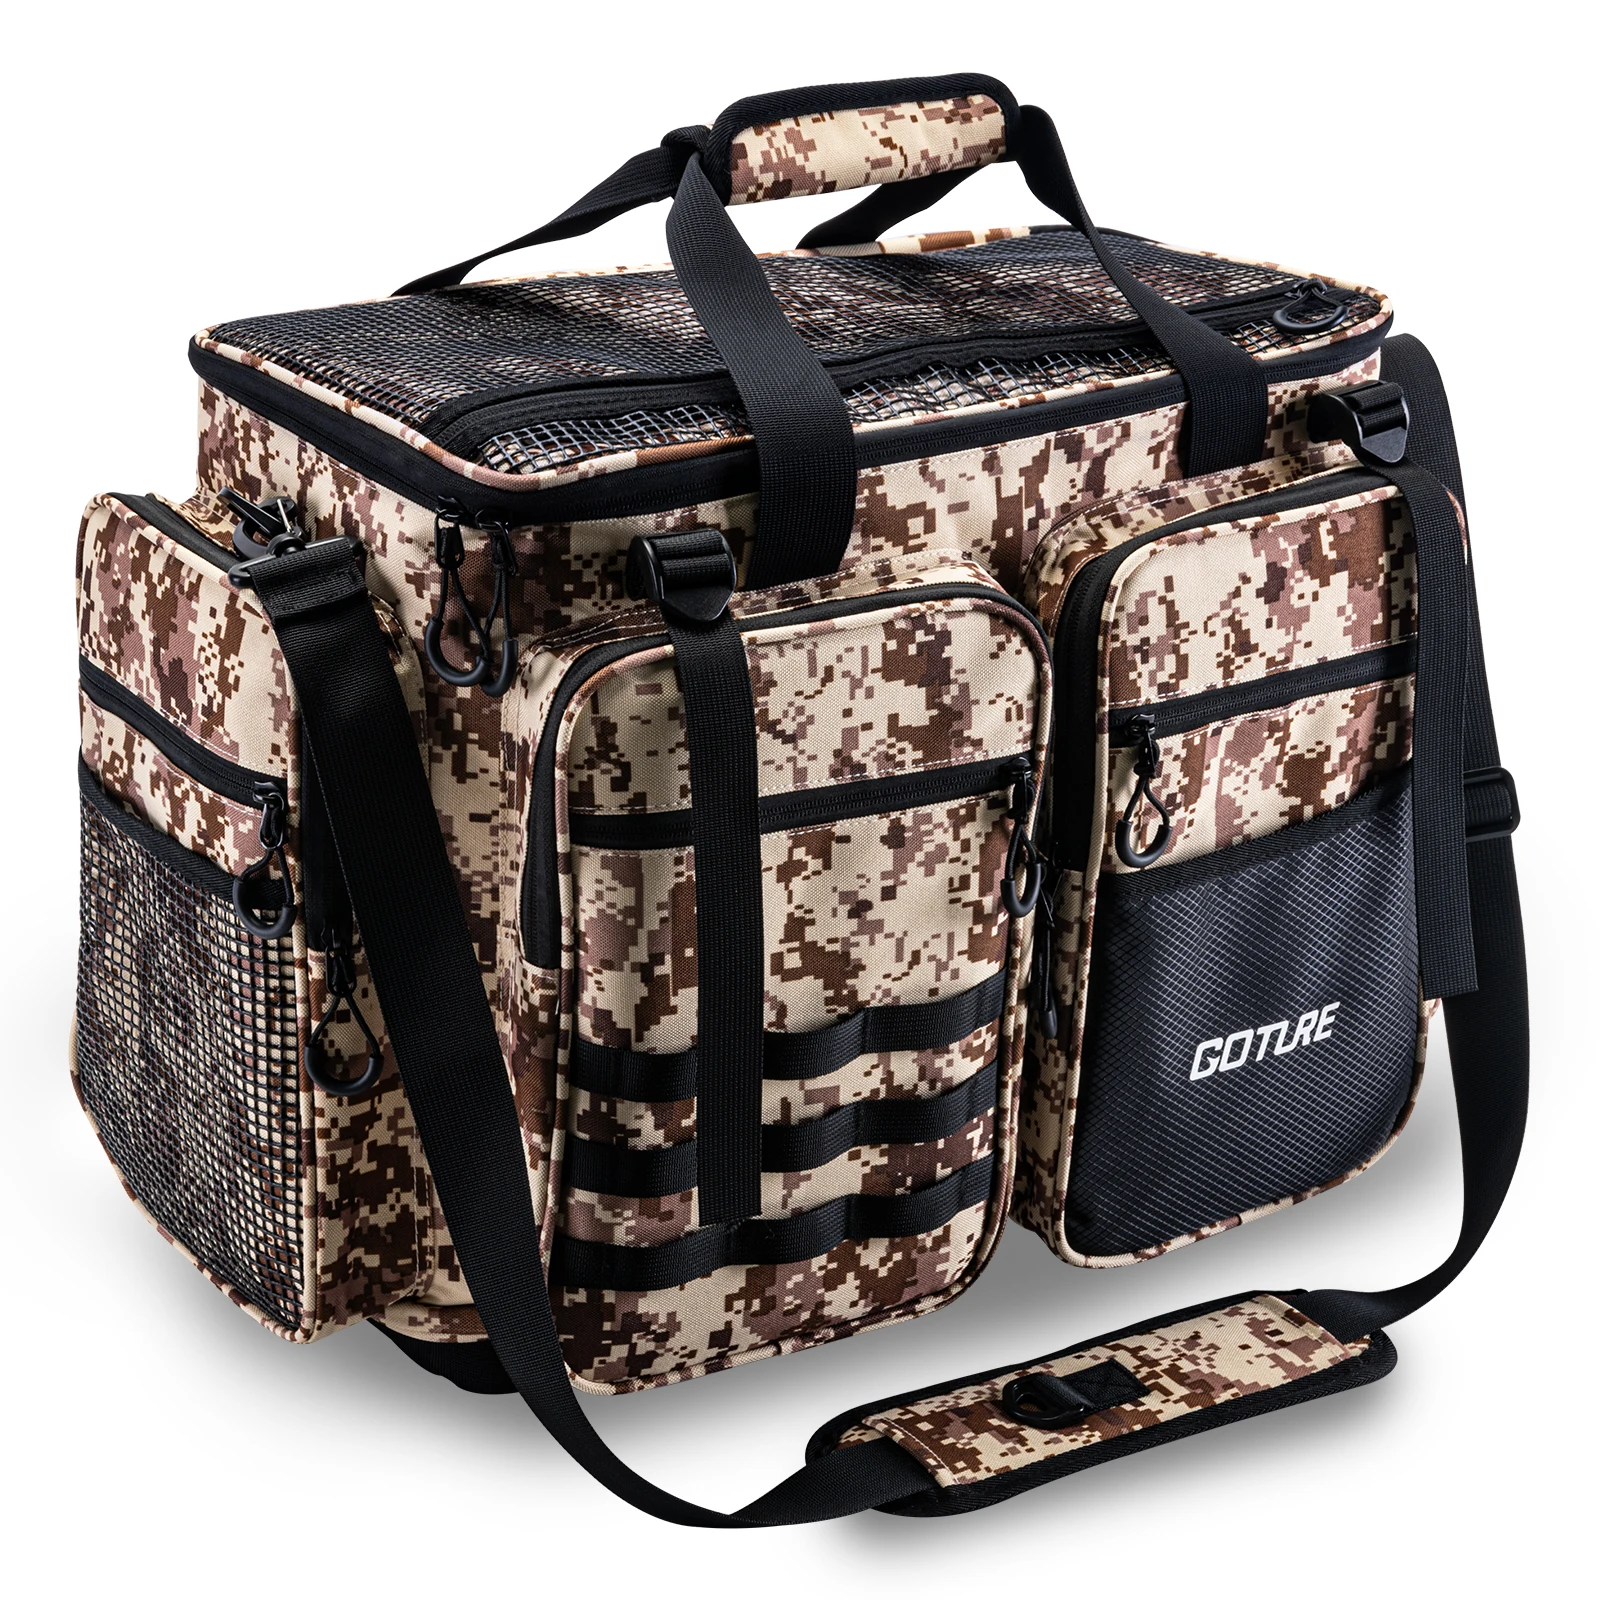 

Goture Waterproof Fishing Bag Outdoor Camping Backpack Large Capacity Multifunctional Lure Fishing Tackle Bag 53*29*38.5cm